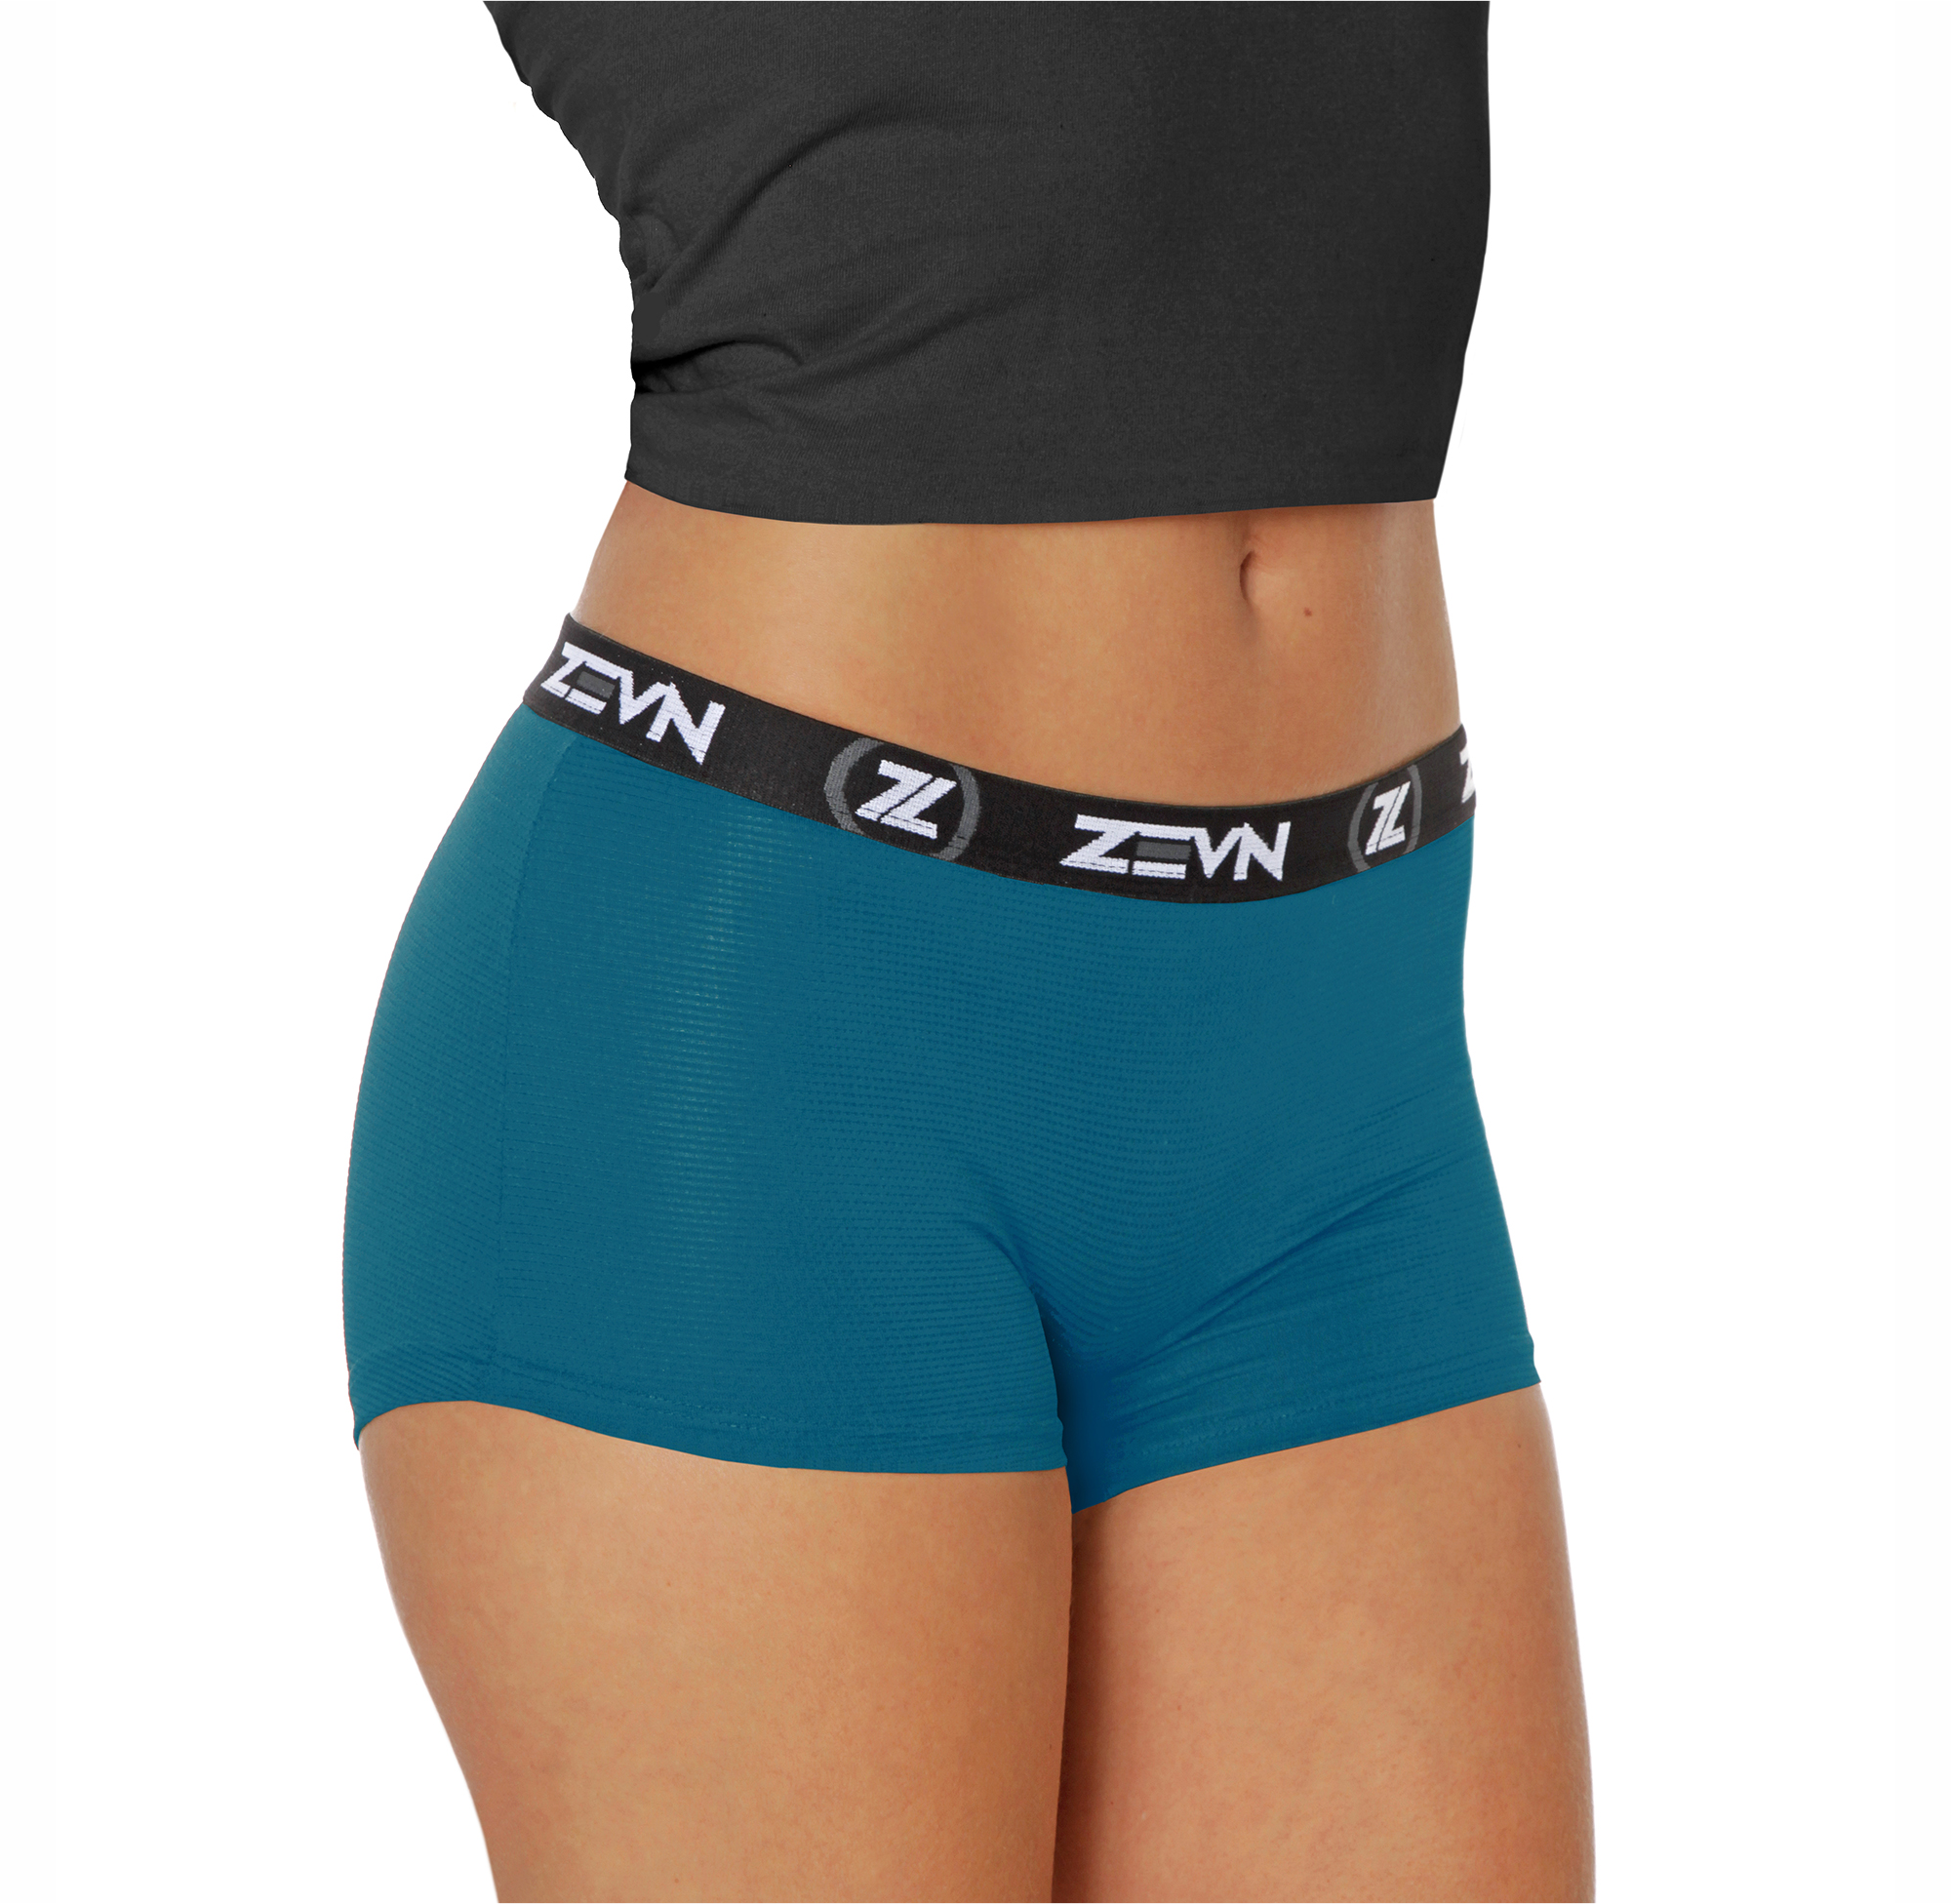 Zevn Best Women Hybrid Performance Underwear V2 - DRY & WET SPORTS